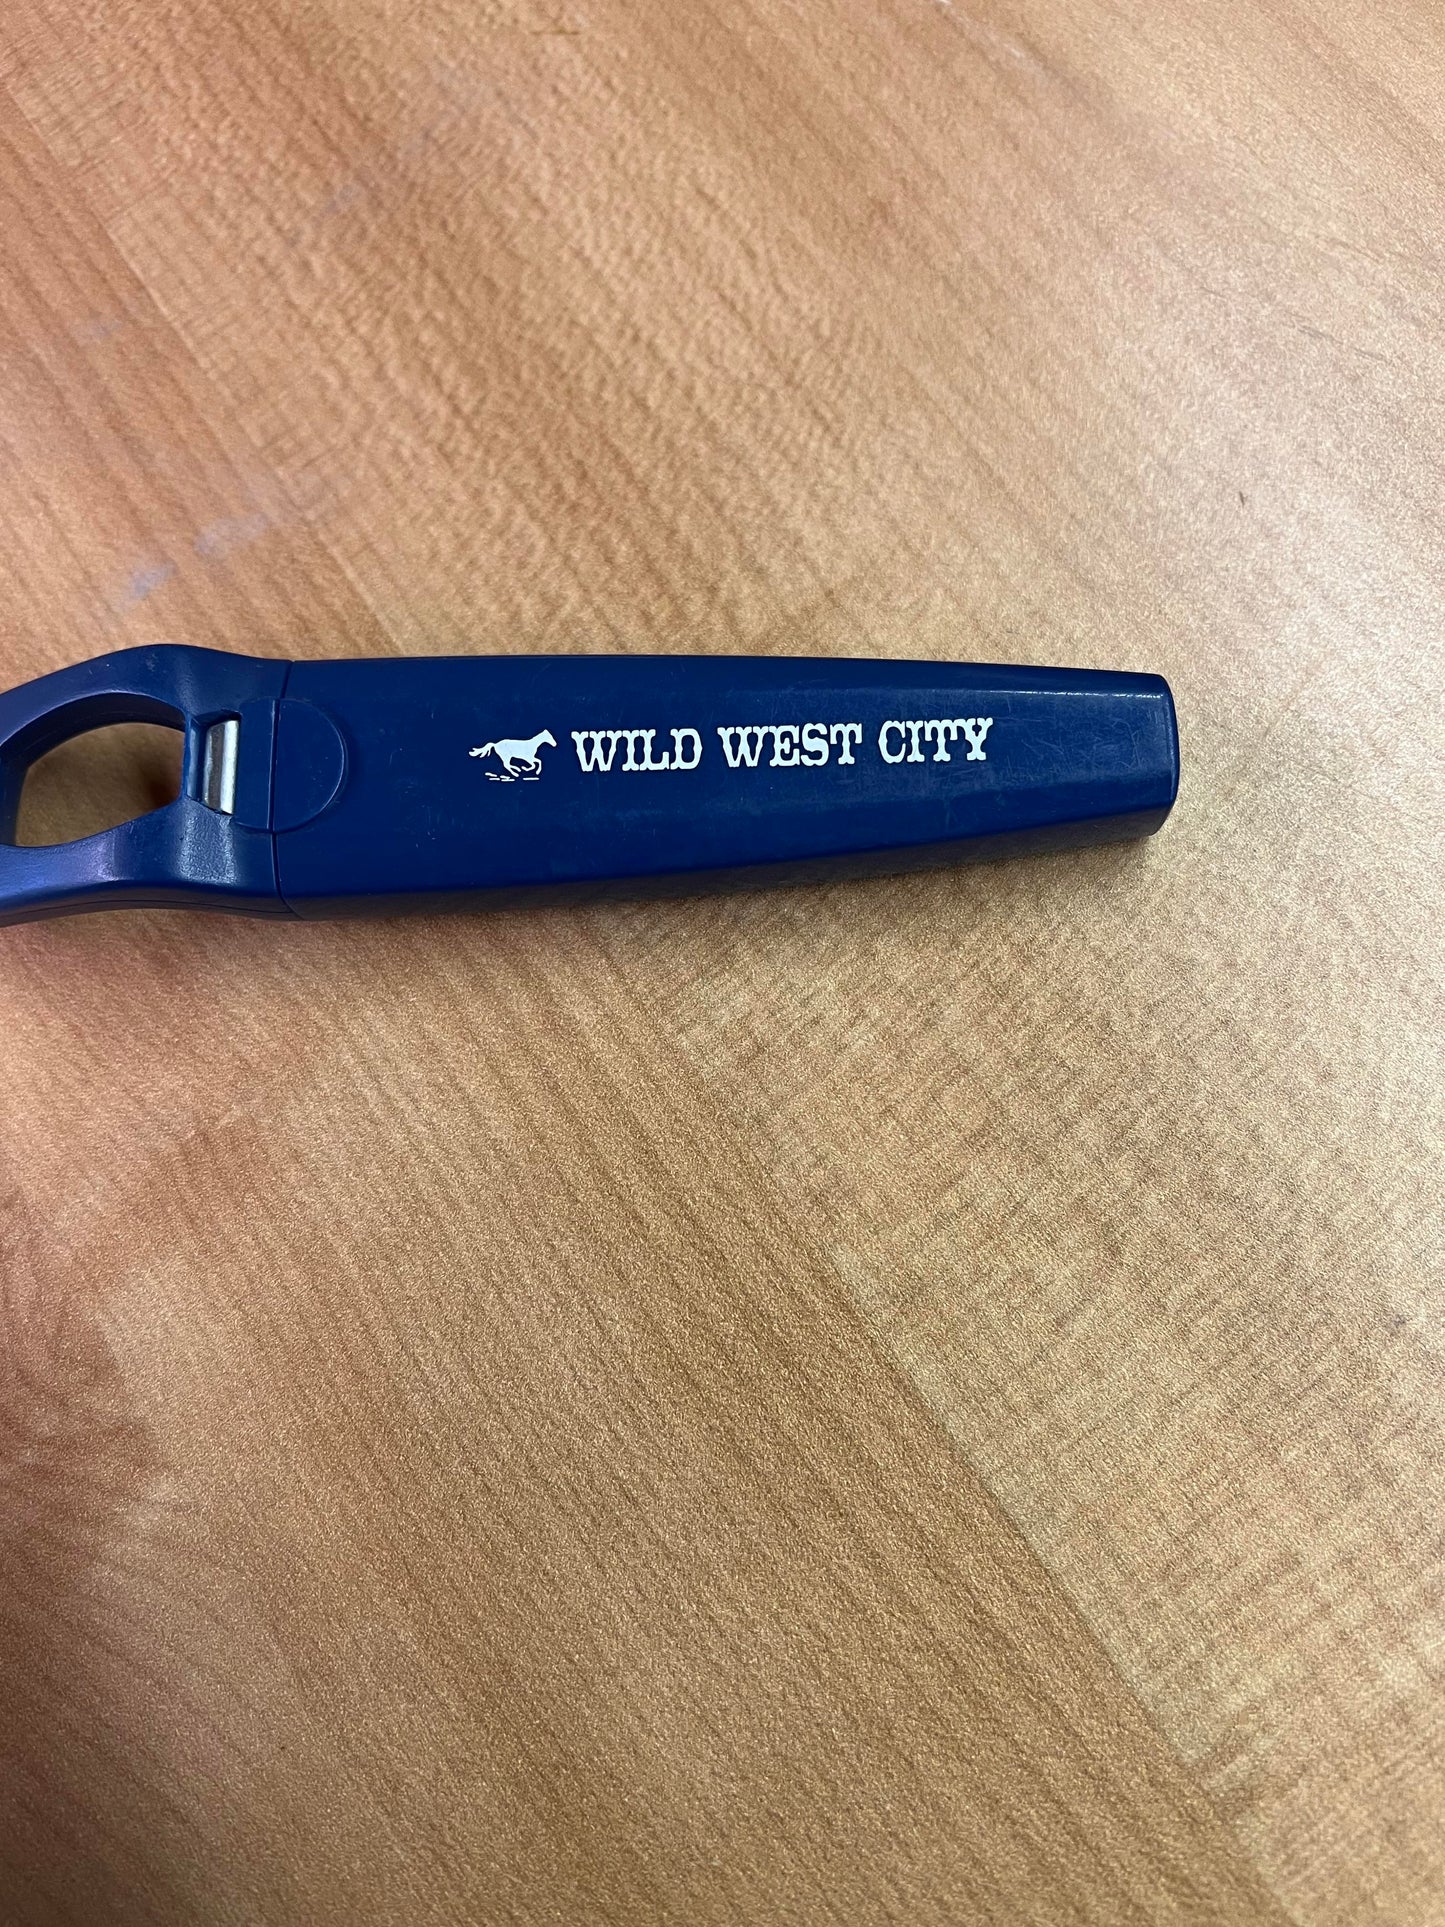 Novelty Wild West City Bottle Opener/corkscrew